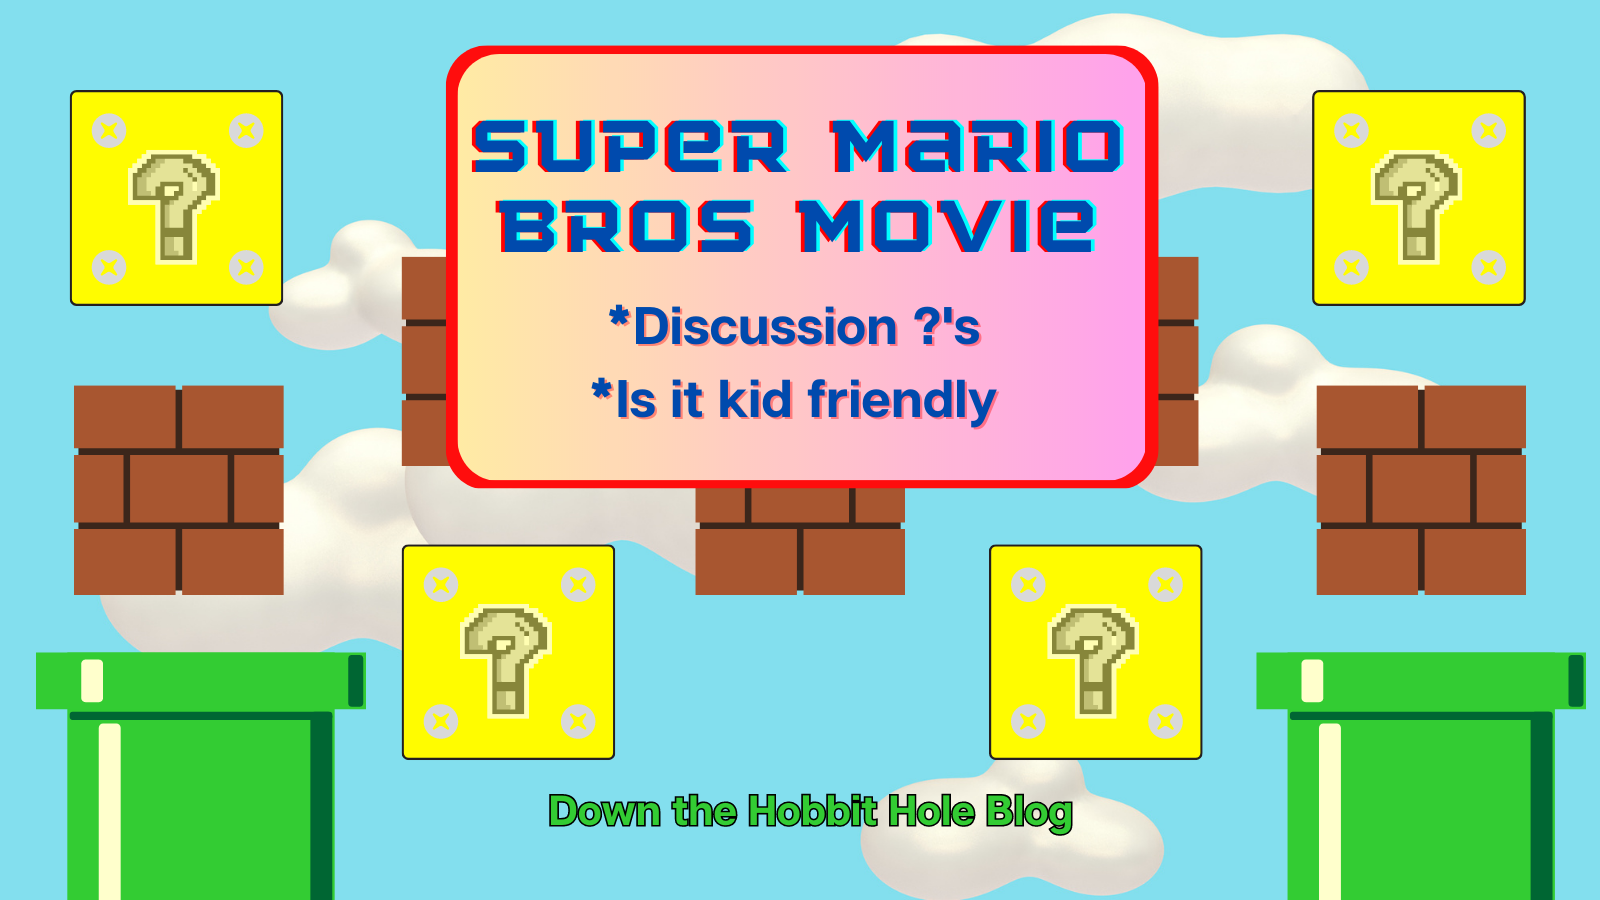 The Super Mario Bros Movie Discussion Questions